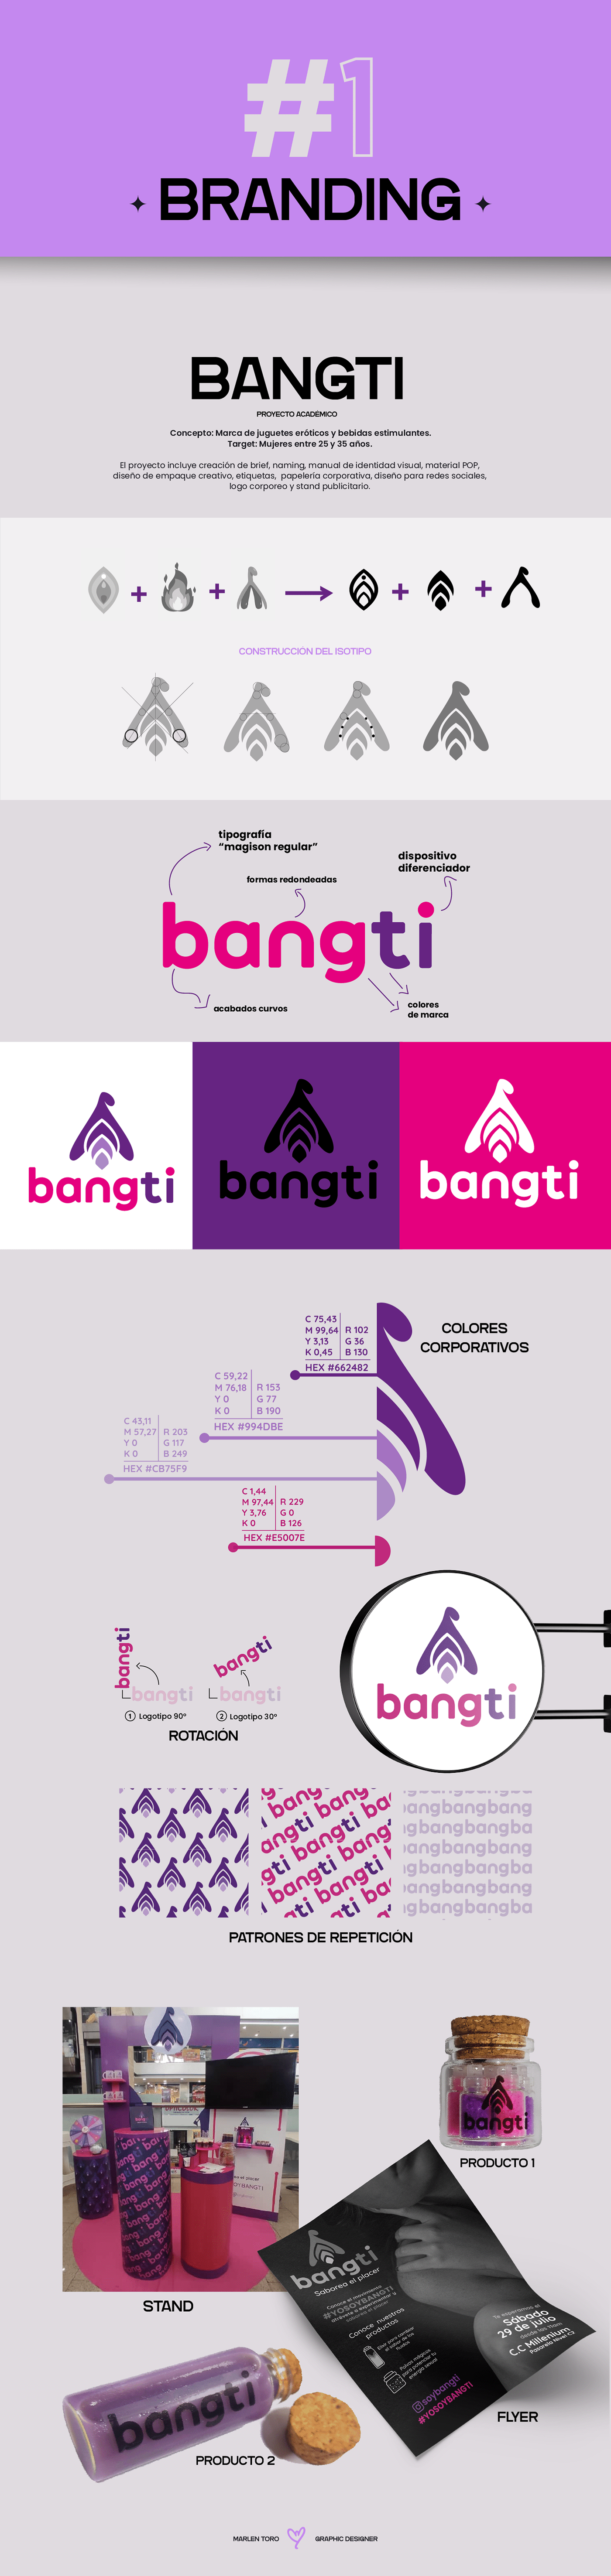 designer brand identity Advertising  visual identity package design  collage Sexshop funeral wine Halloween